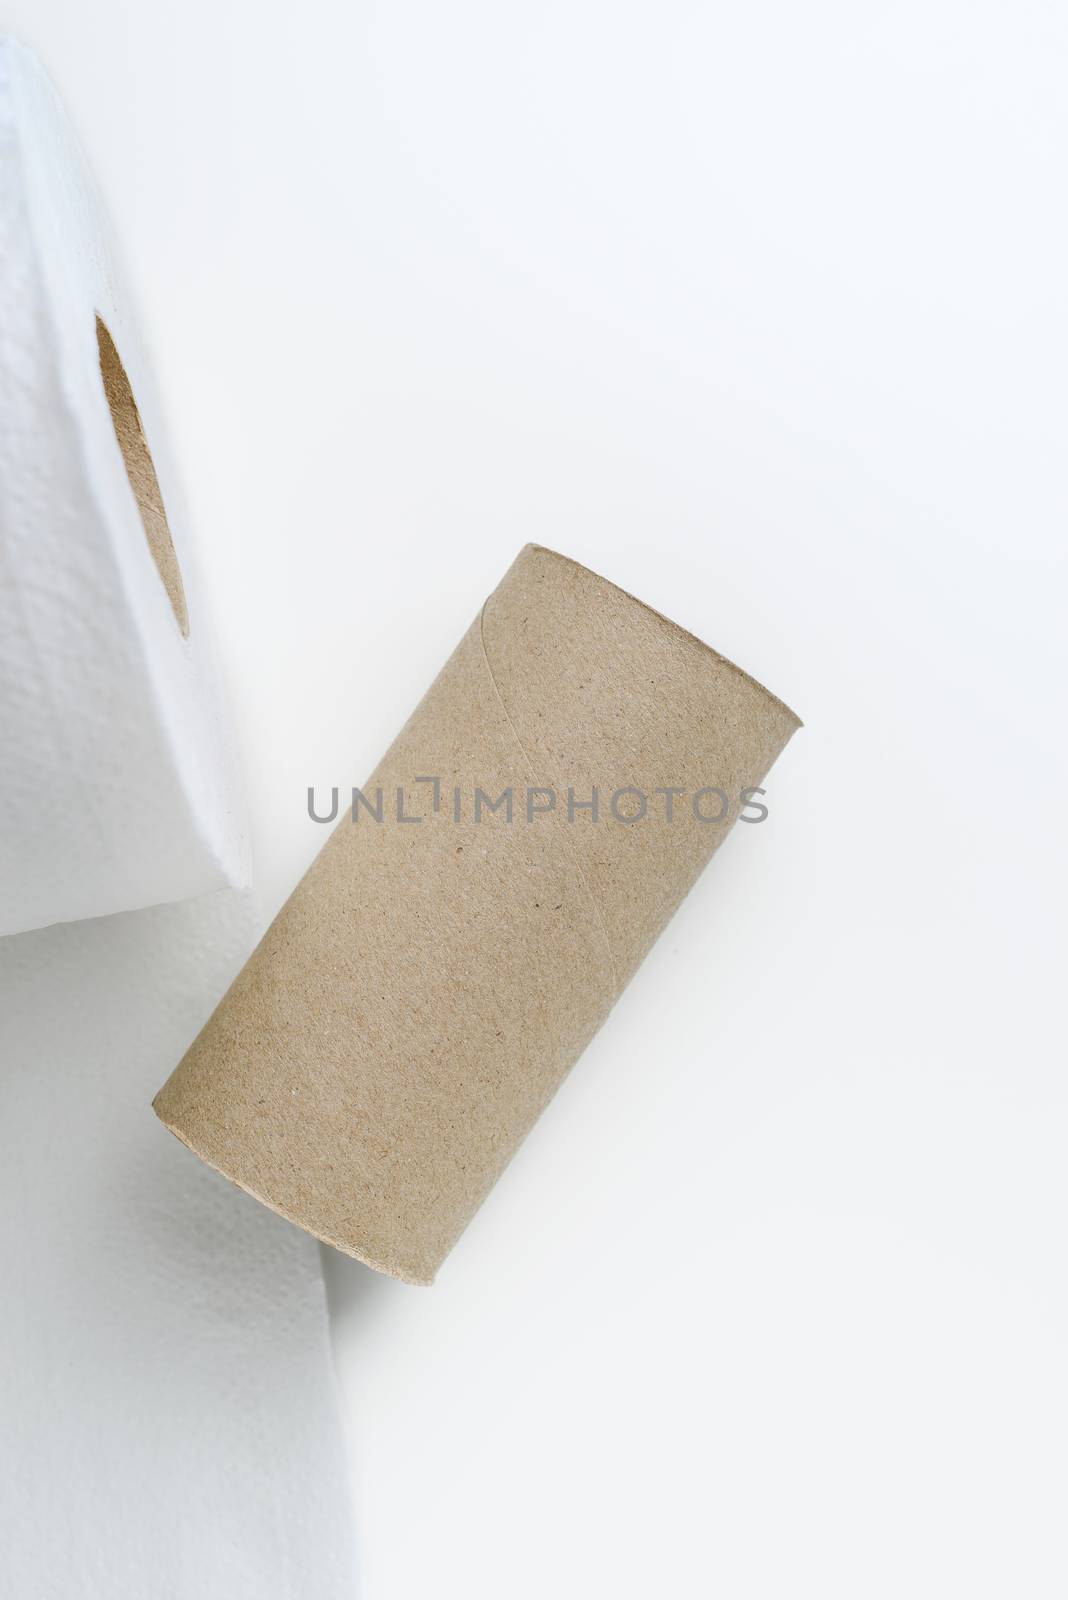 toilet paper by antpkr